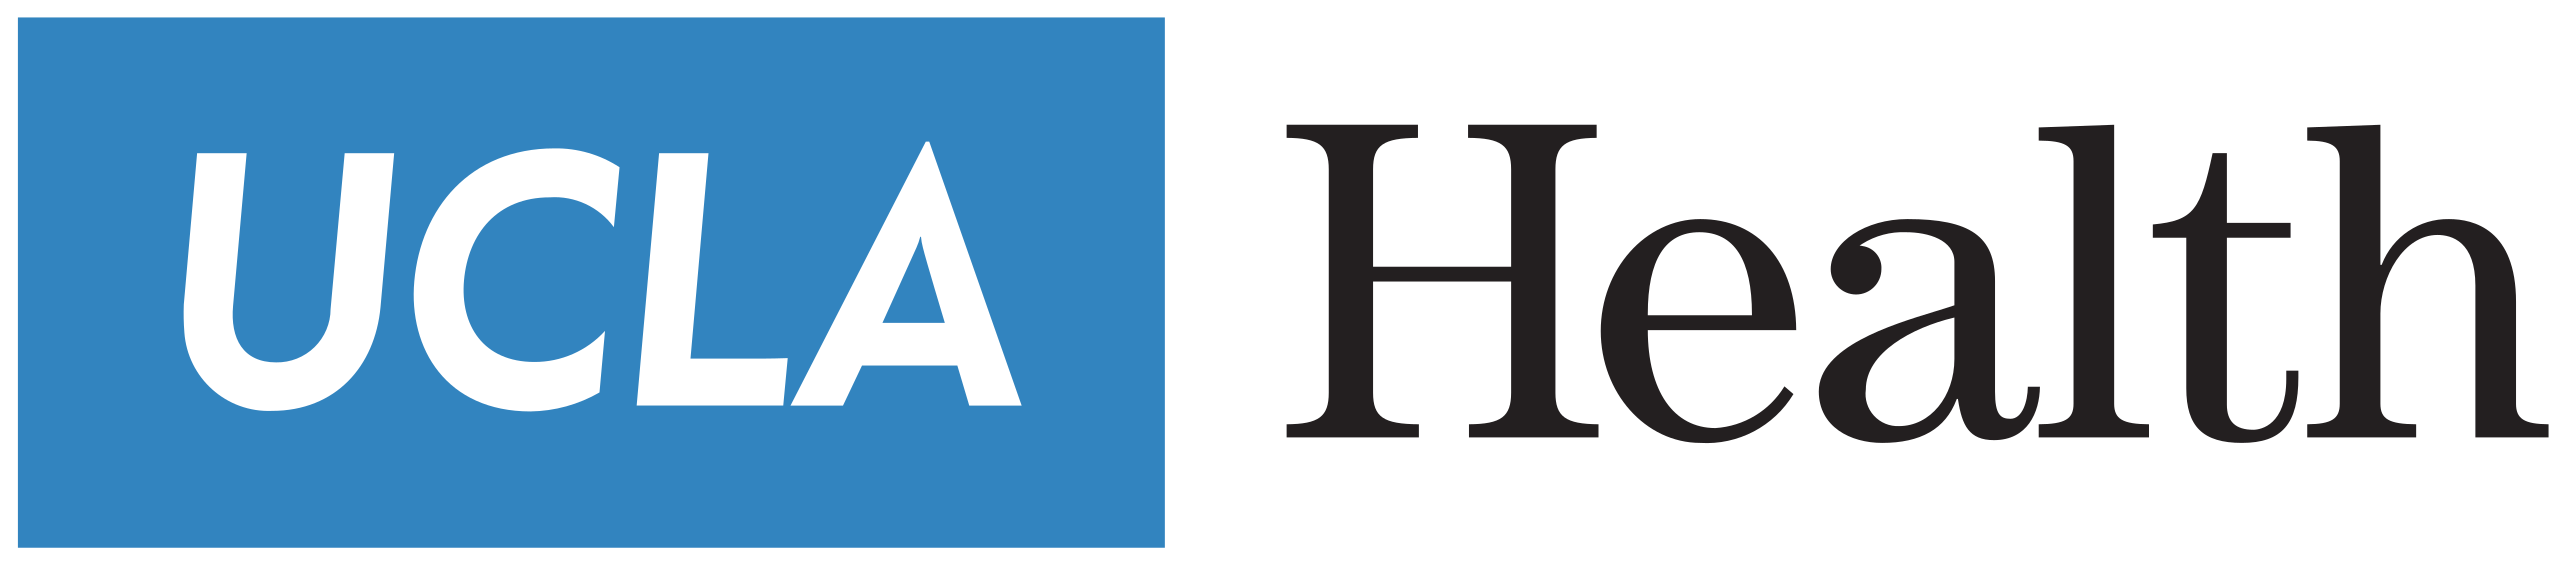 UCLA_Health_logo.svg